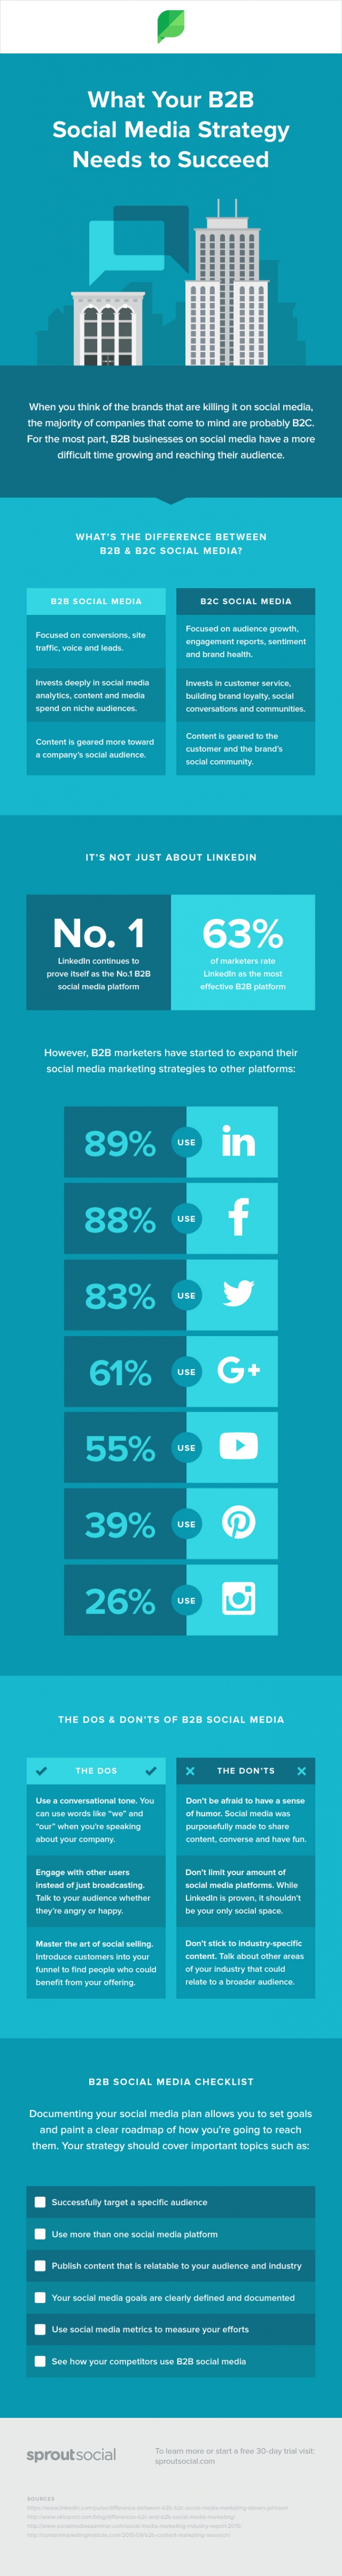 Social Media Strategie-Tipps für B2B-Unternehmen [Infografik]